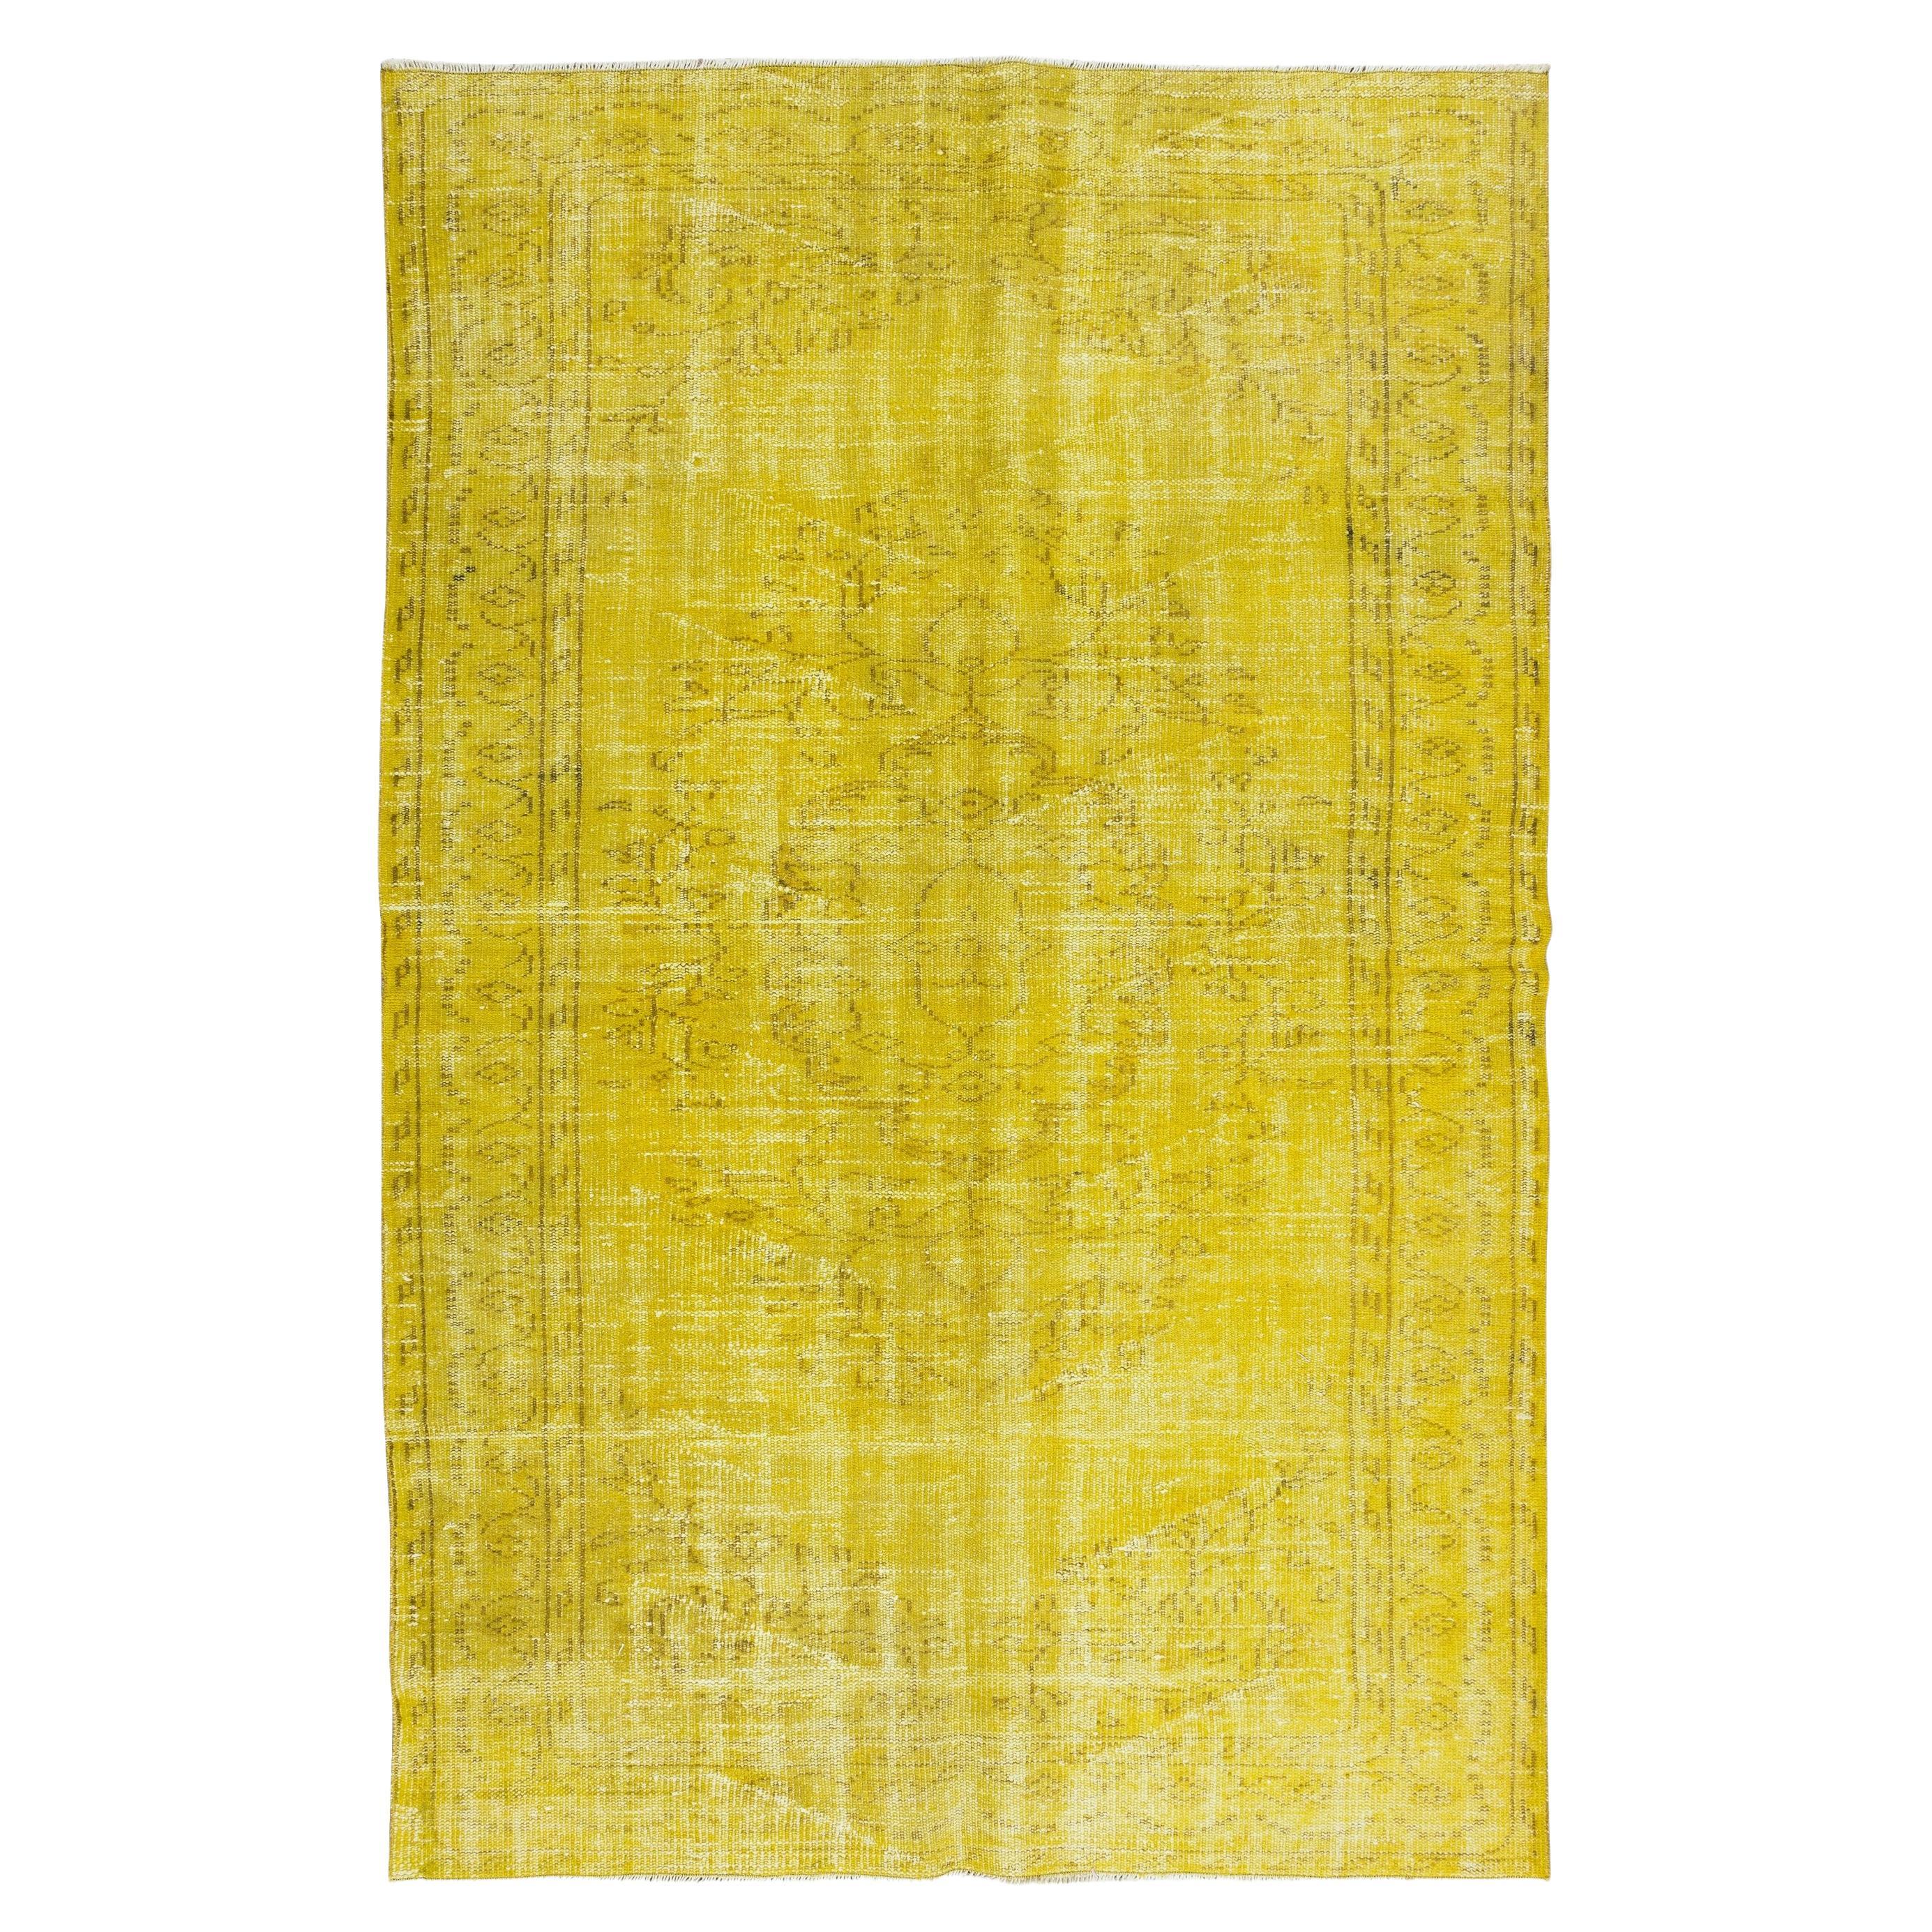 5.6x9.5 Ft Yellow Area Rug for Modern Home & Office, Turkish Handmade Carpet (tapis turc fait à la main)